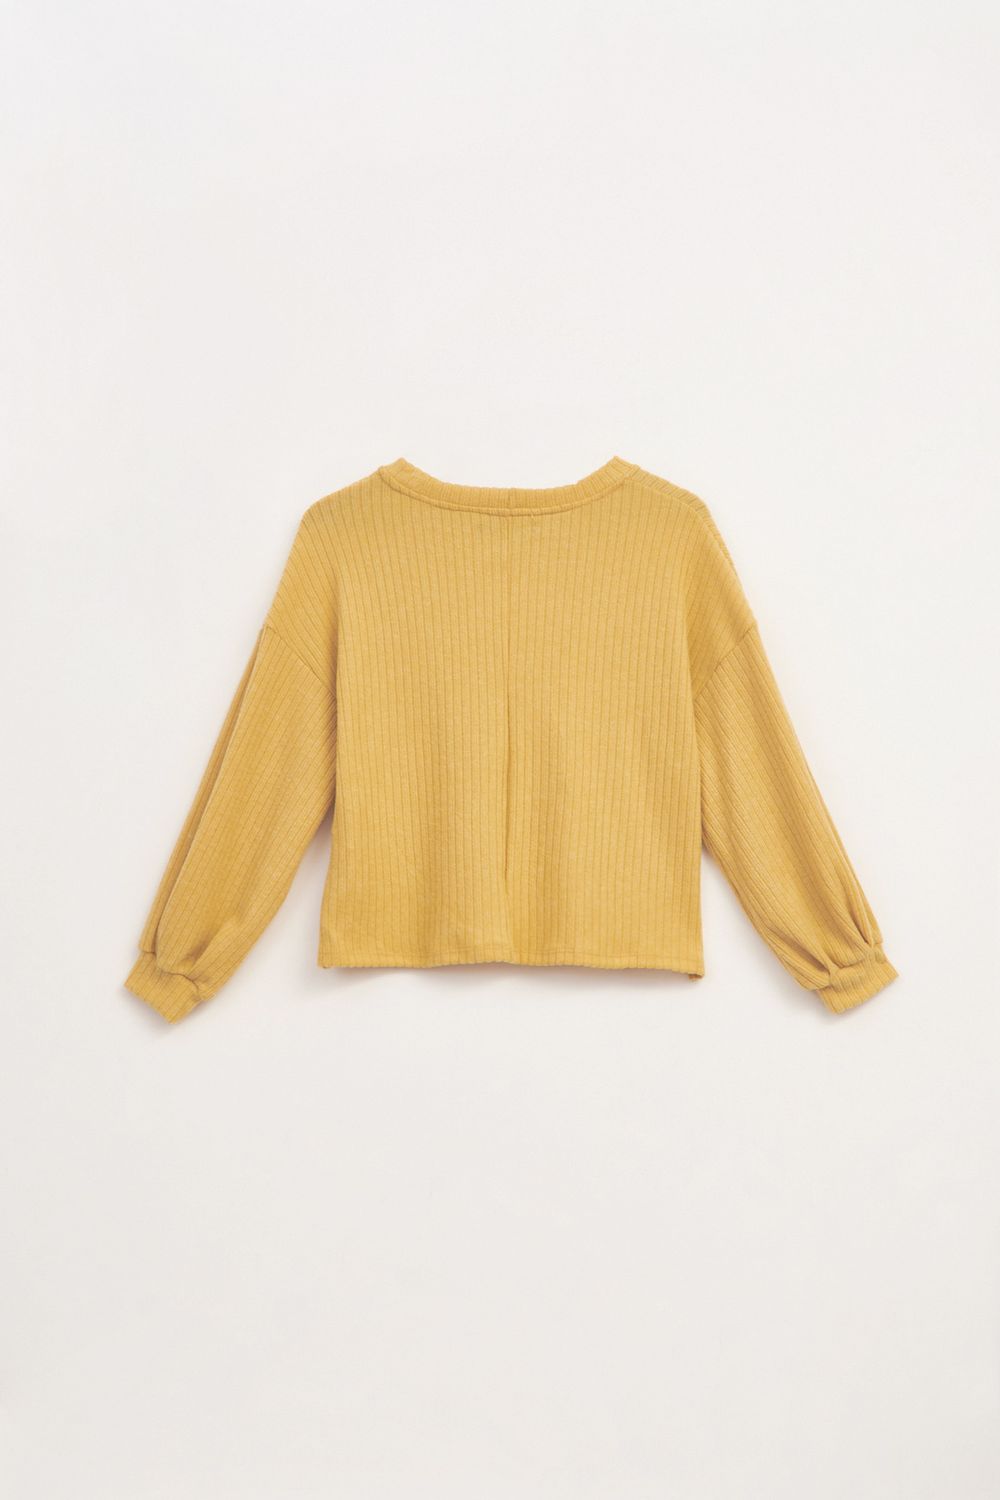 sweater-Trujillo-mostaza-44